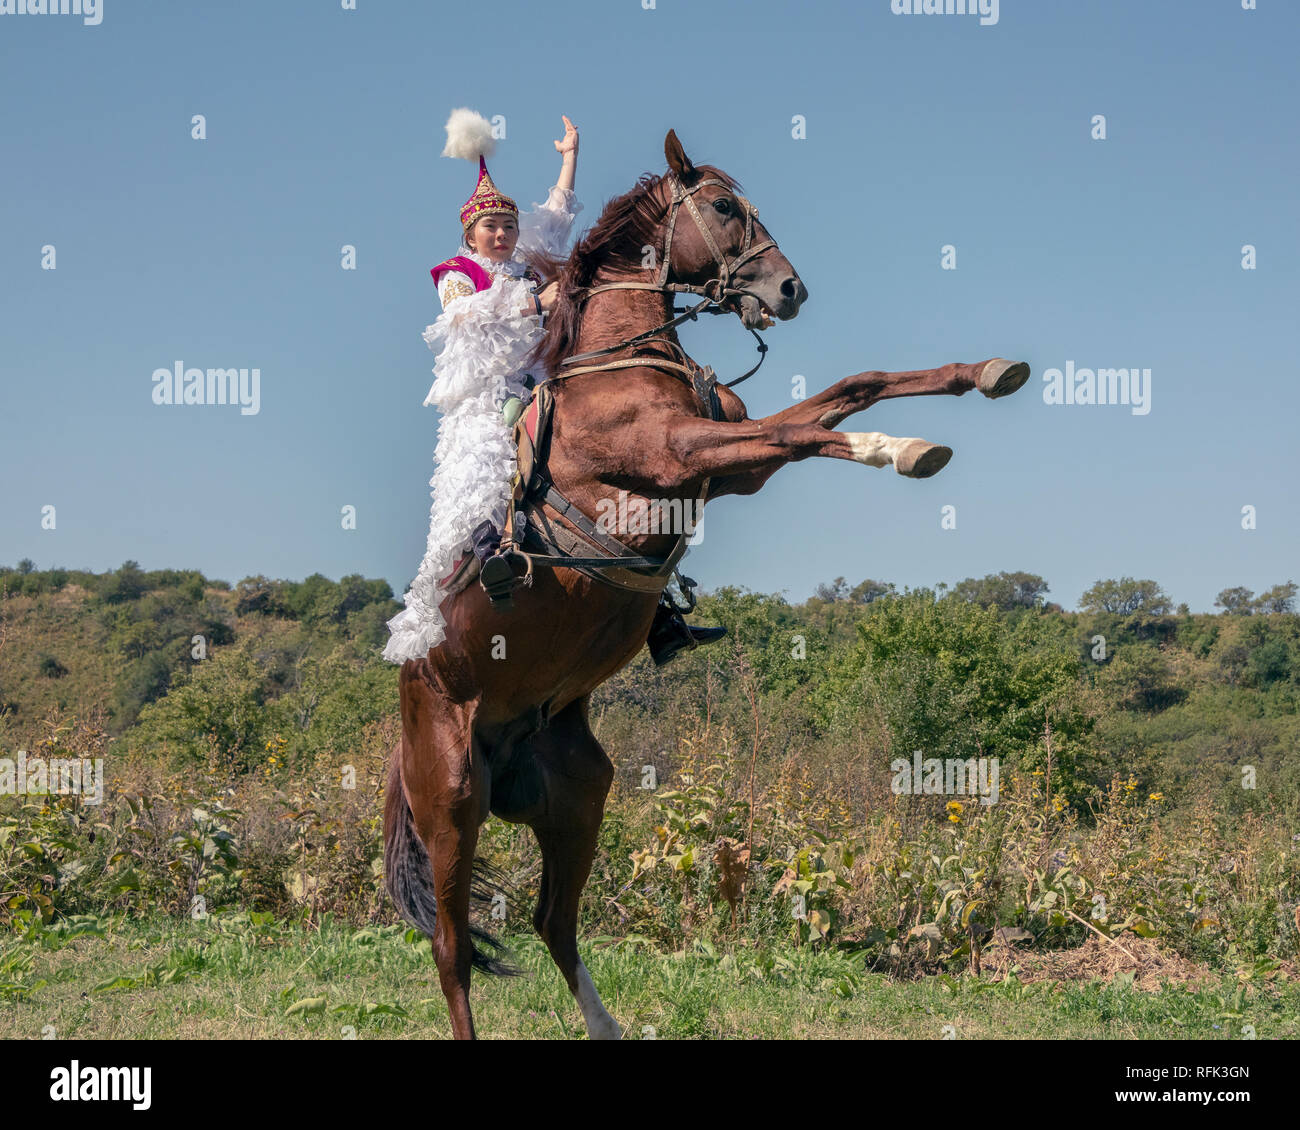 Kazakh woman in traditional attire mounted on a rearing horse, Almaty, Kazakhstan Stock Photo